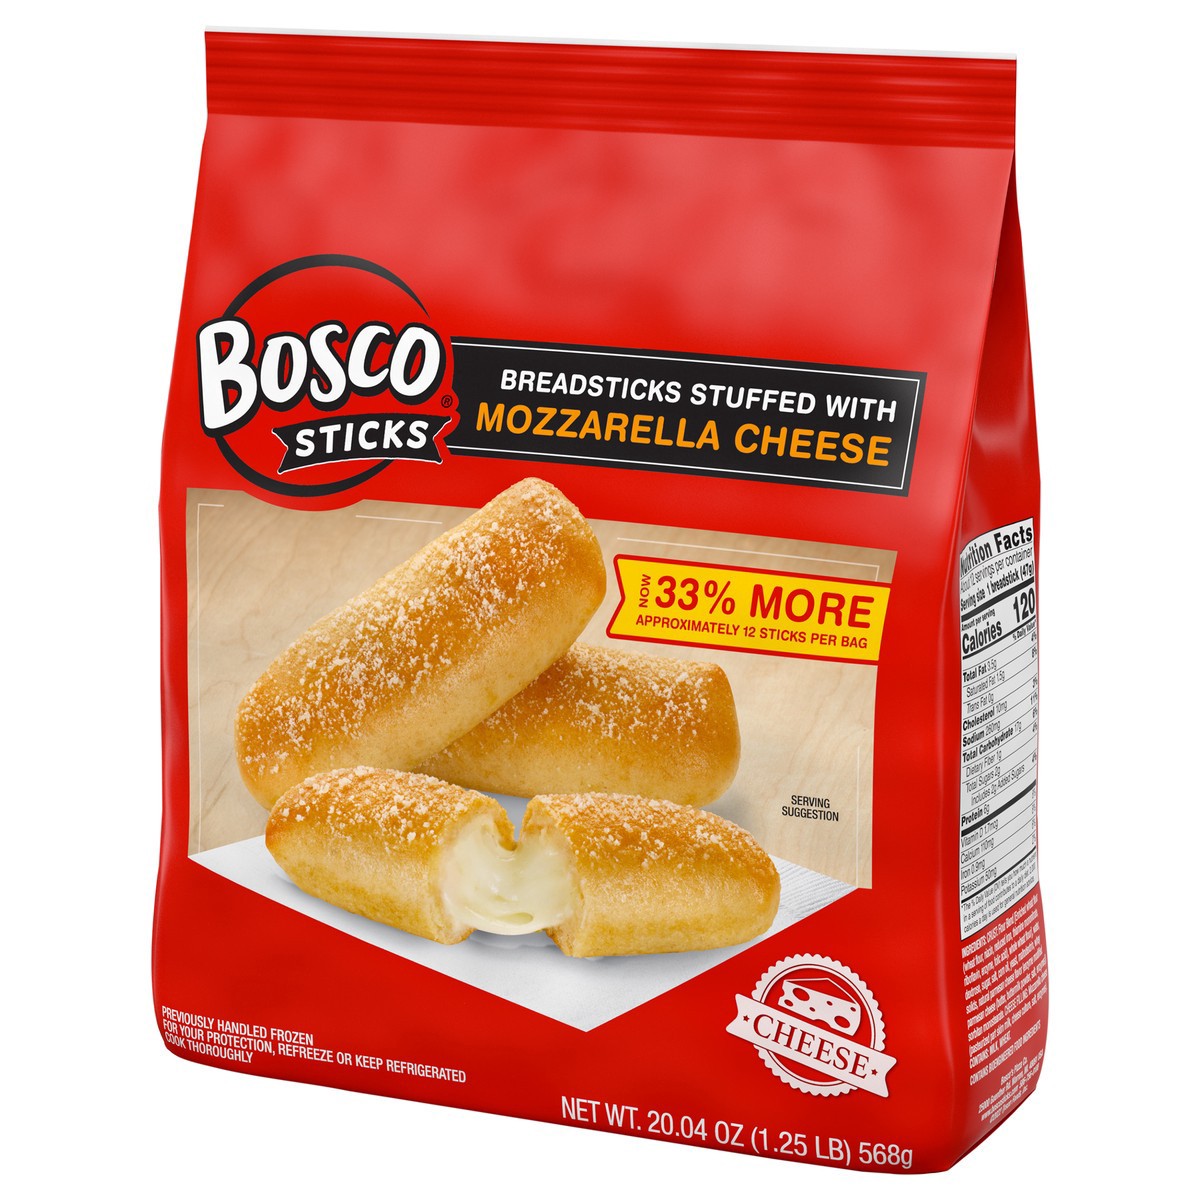 slide 2 of 5, BOSCOS PIZZA Bosco Mozzarella Cheese Stuffed Breadsticks, 20.04 oz (Frozen), 568.12 g